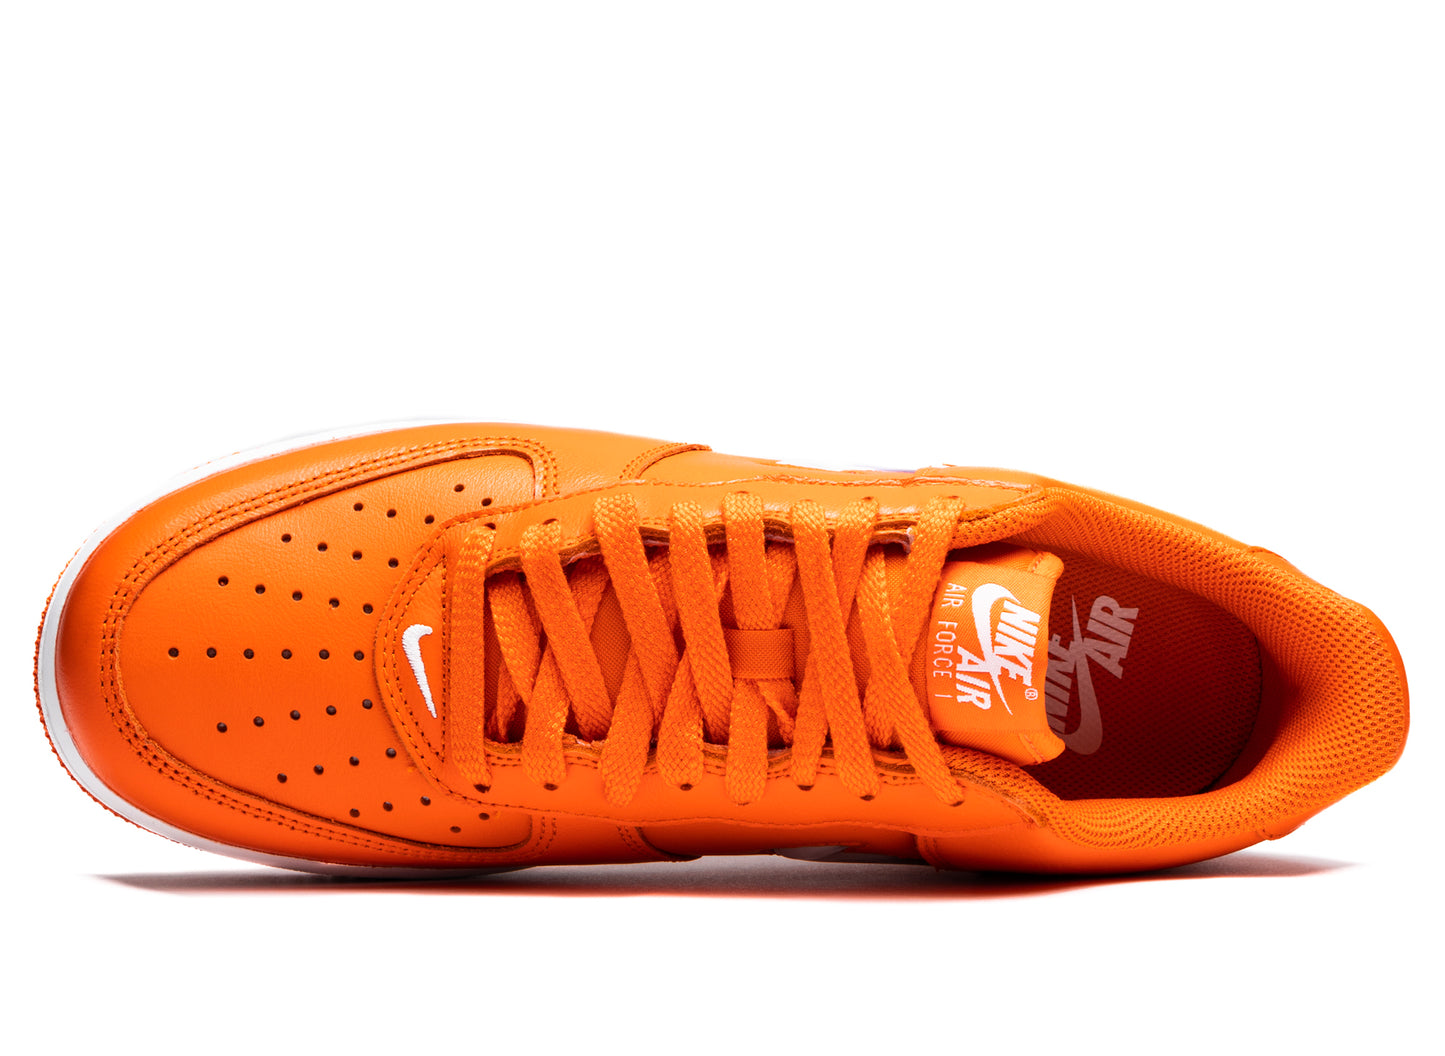 Nike Air Force 1 Low Retro 'Orange Jewel'